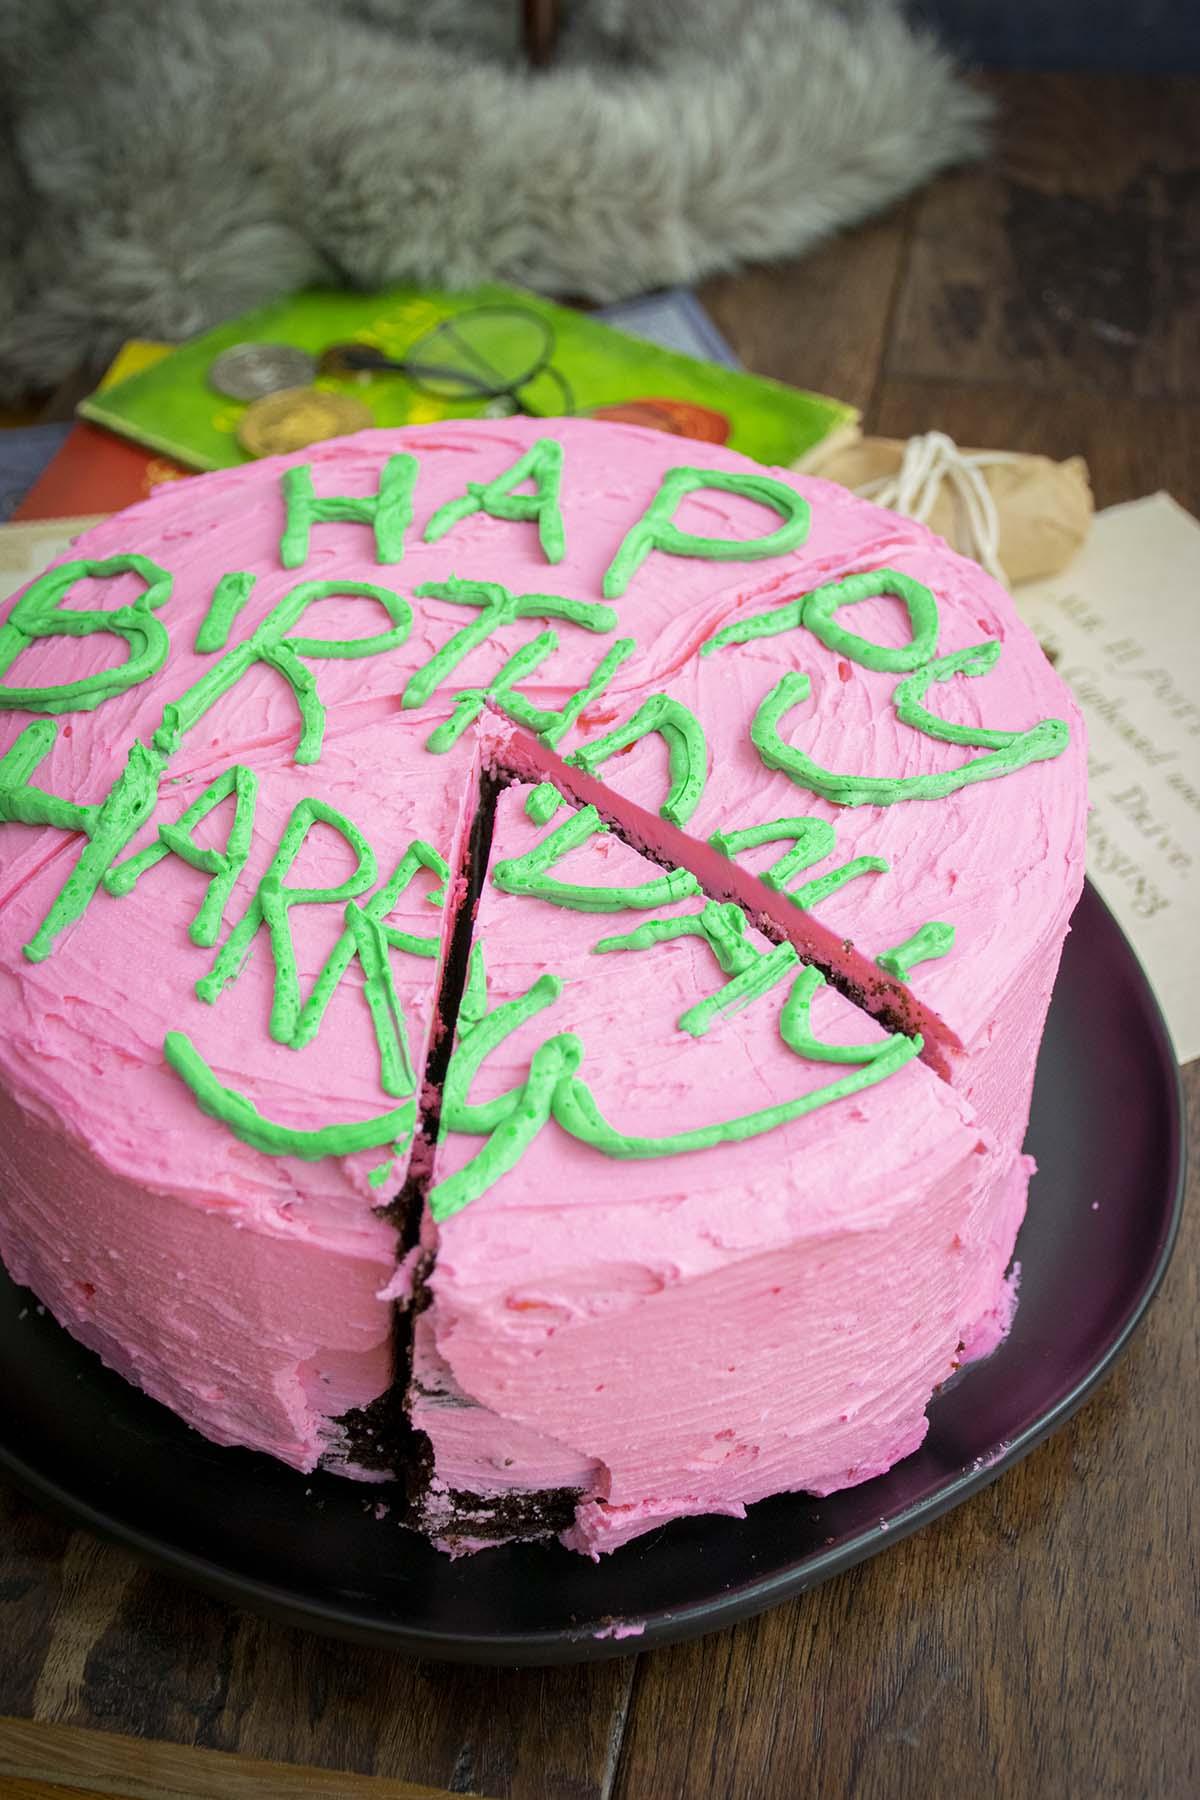 hagrid's birthday cake